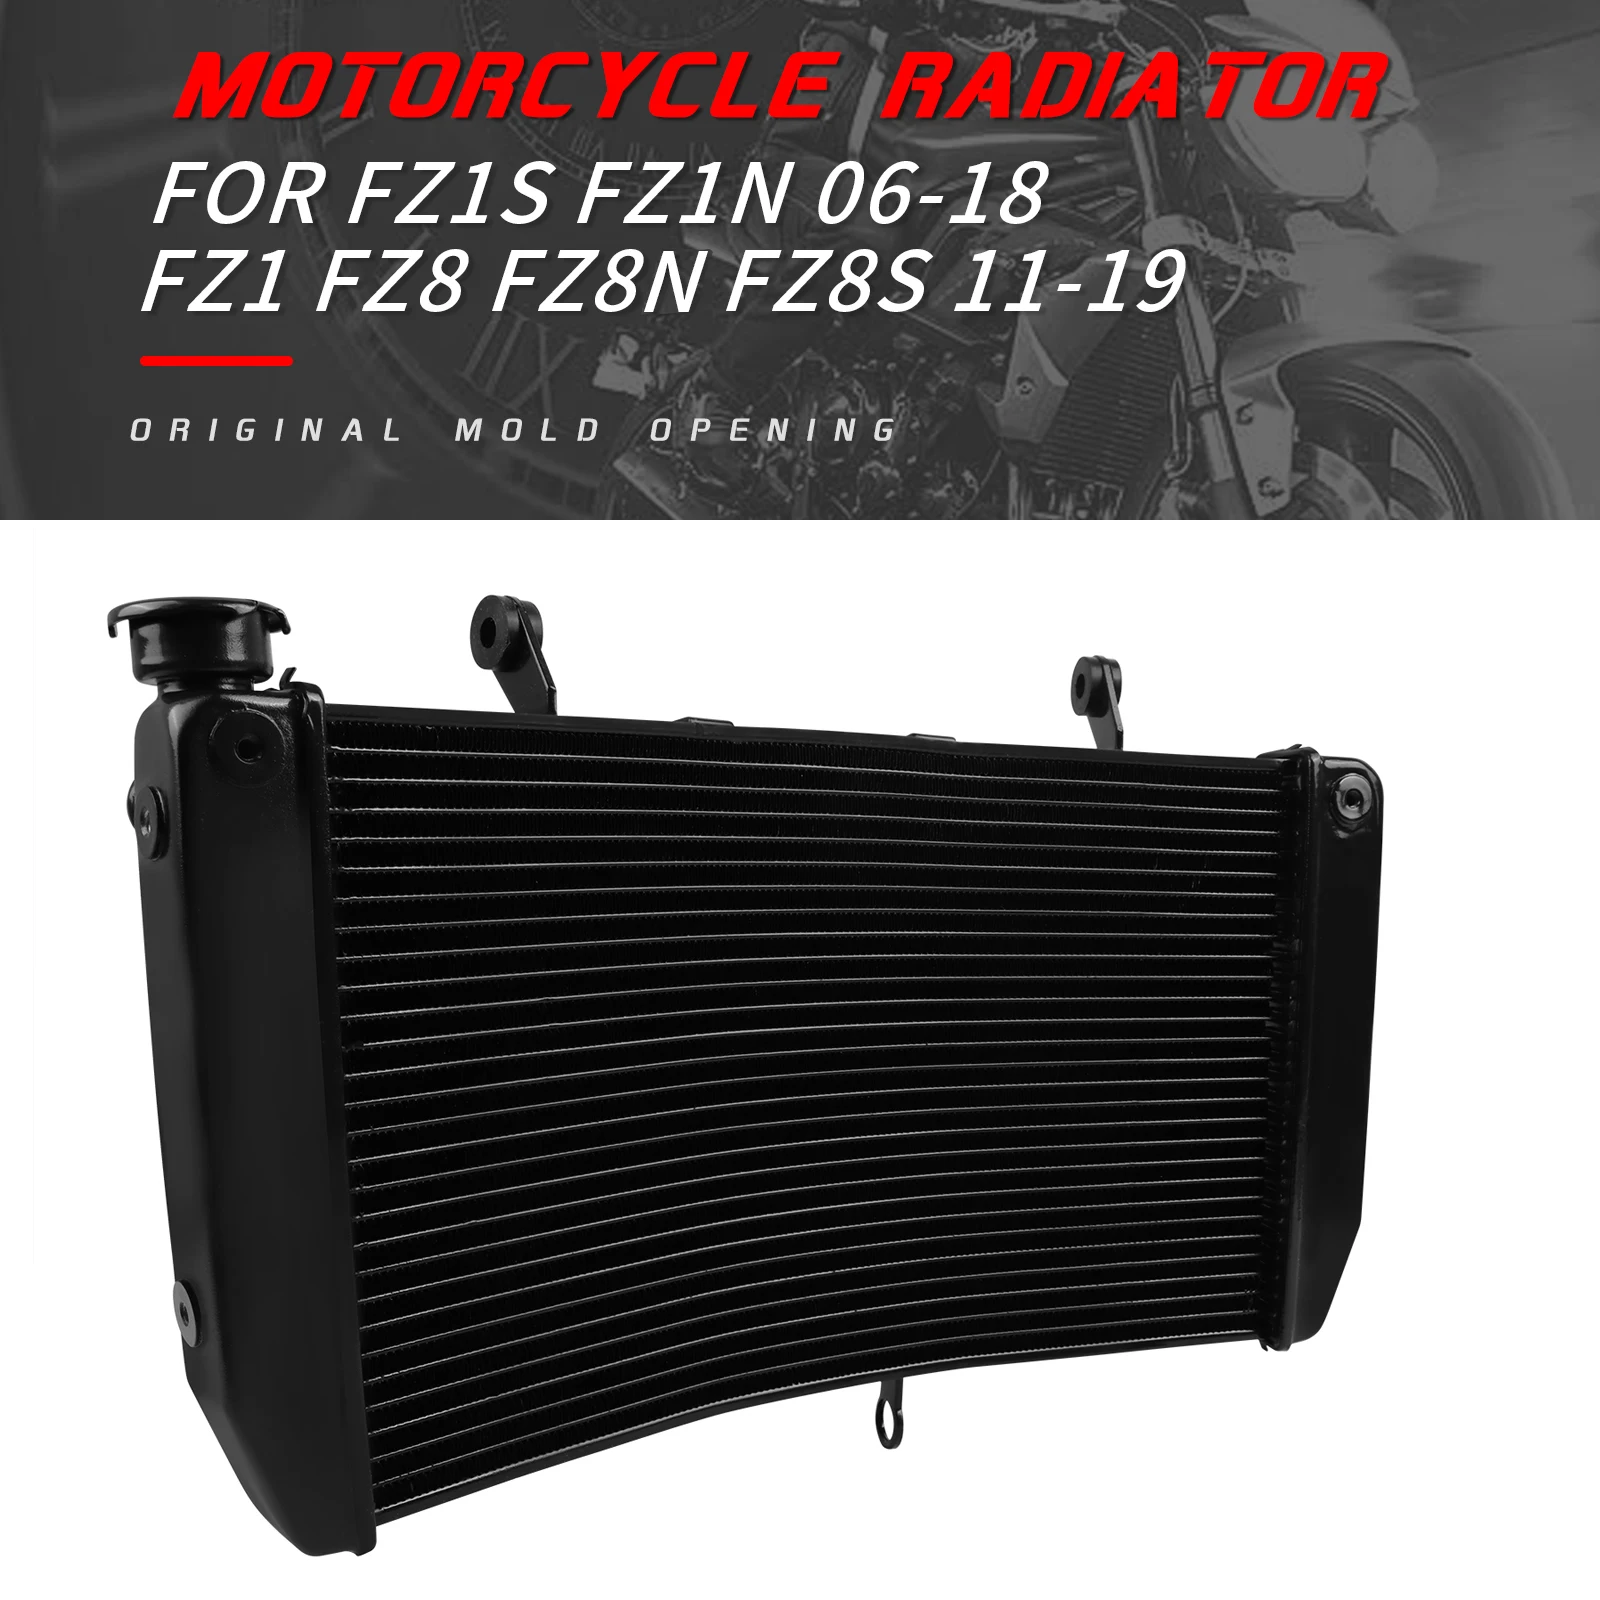 Motorcycle Engine Radiator Aluminum Cooler Cooling Water Tank For YAMAHA FZ1S FZ1N FZ1-N 2006-2018 FZ1 FZ8 FZ8N FZ8S 2011-2019